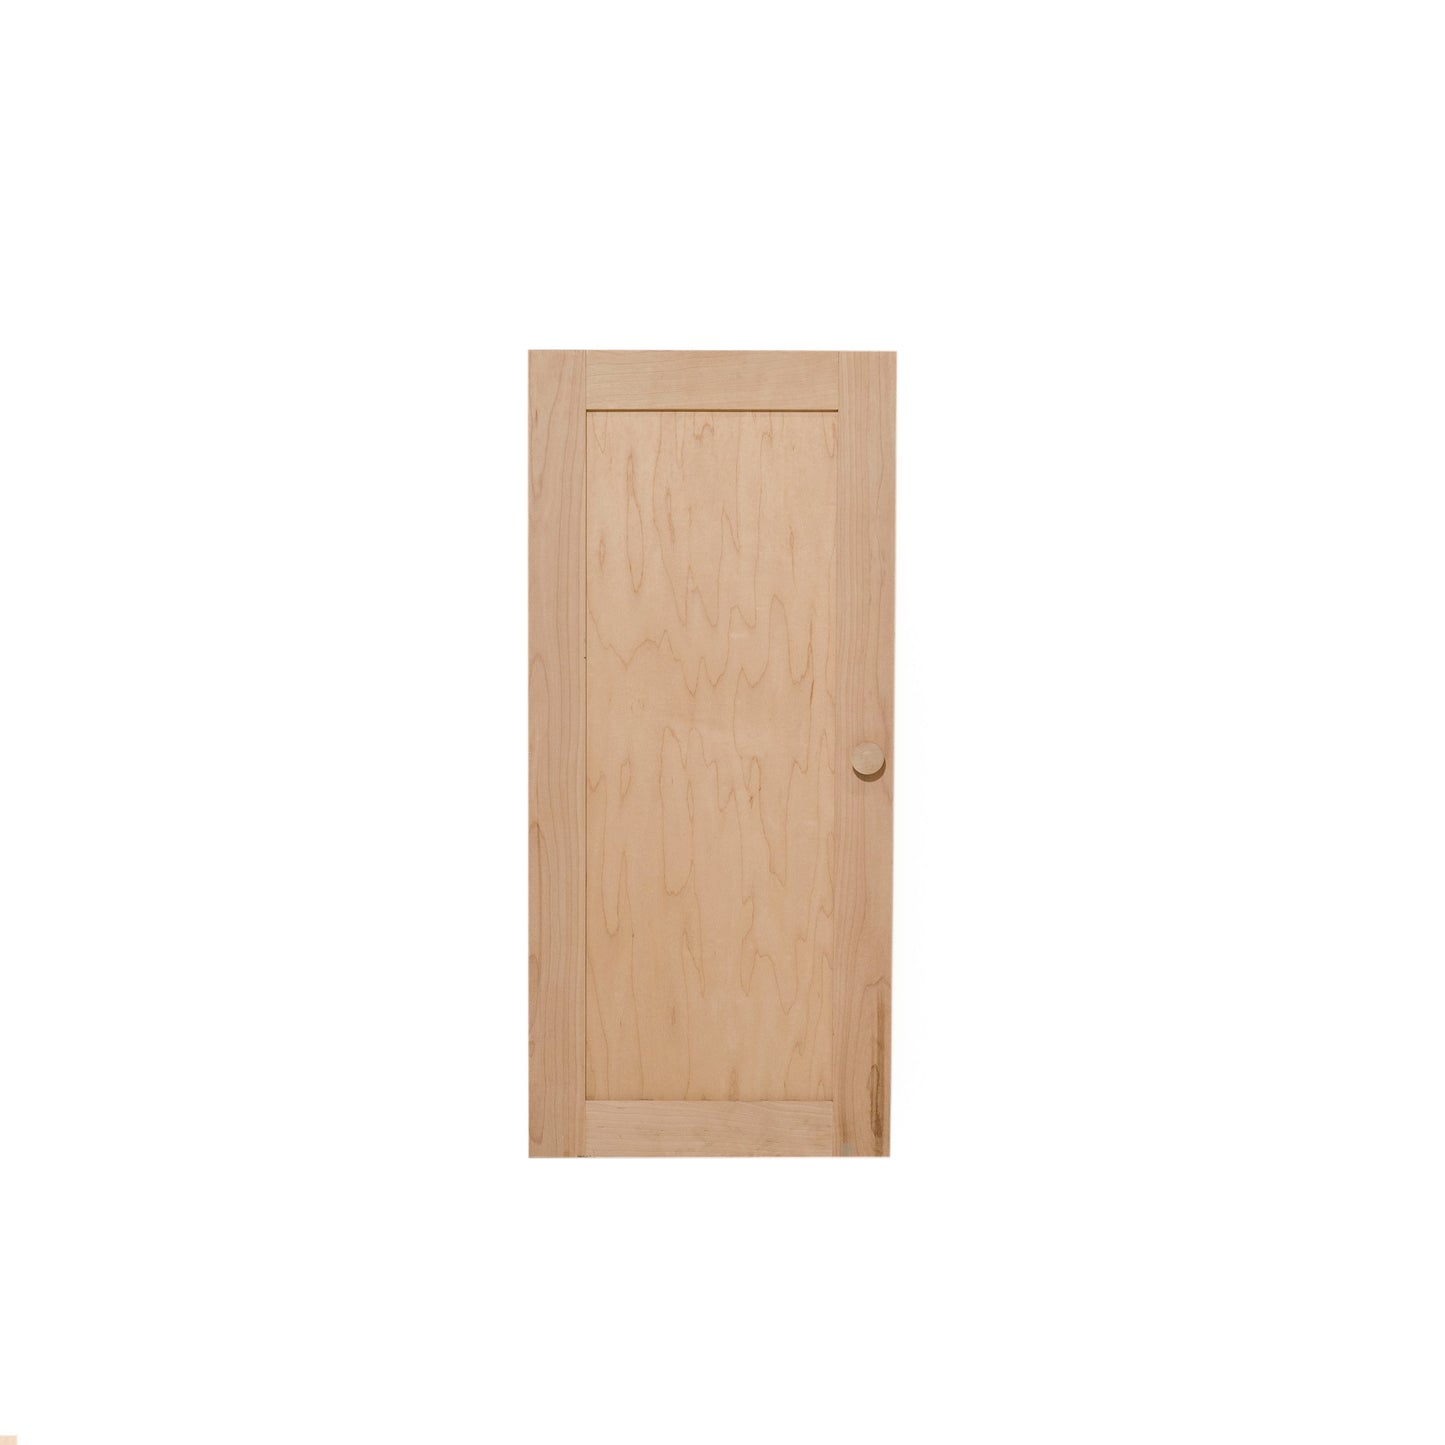 Details of unfinished door used for Berkshire Shaker Stepback Bookcase Hutch. 